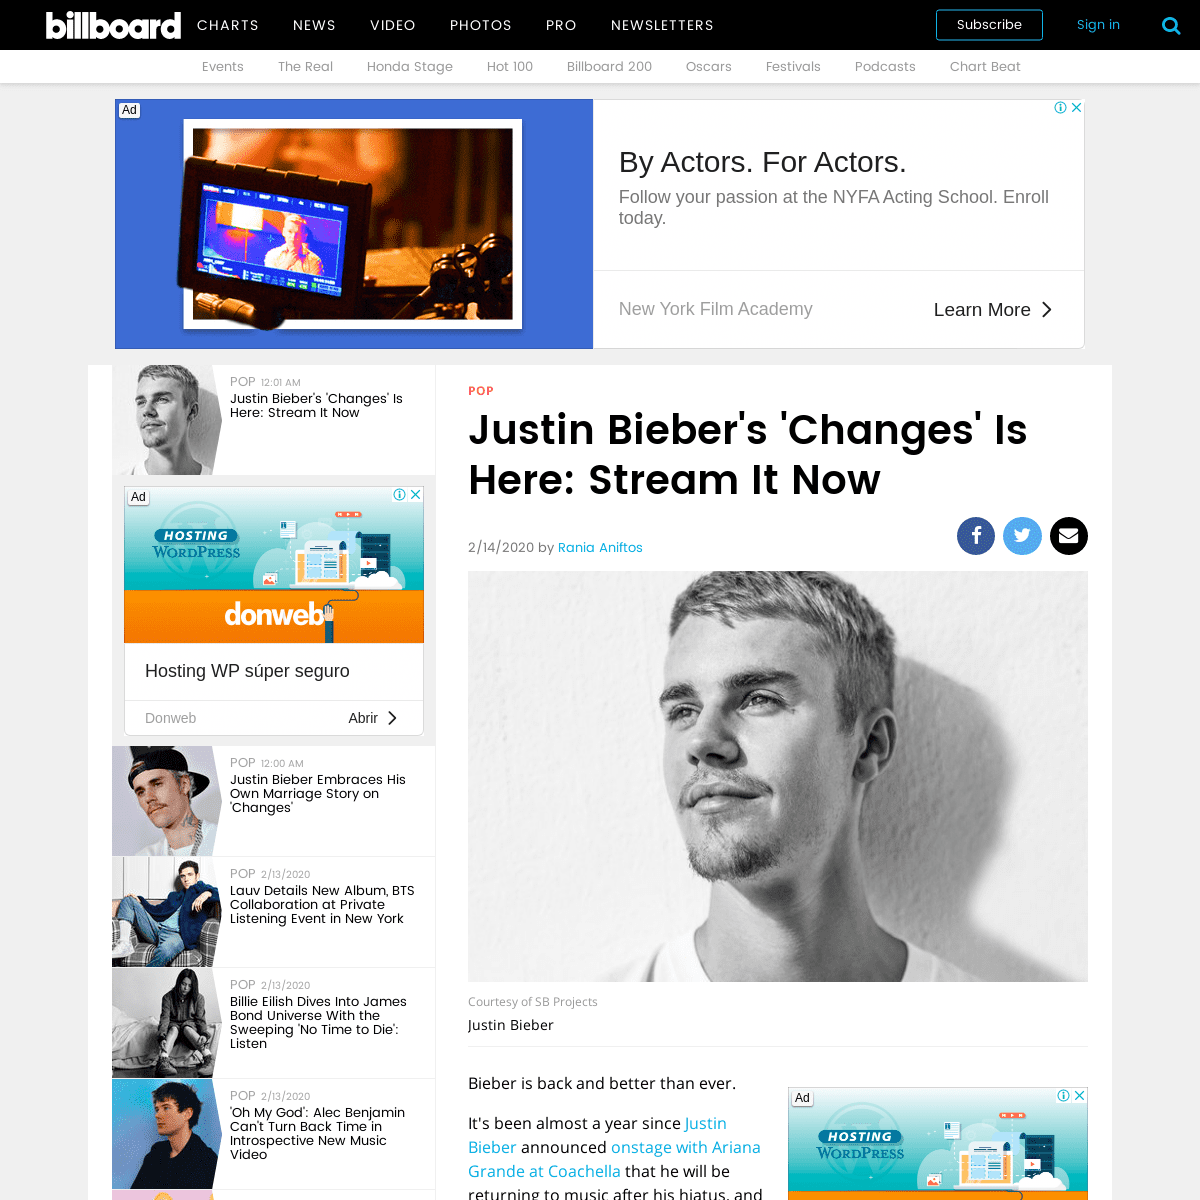 A complete backup of www.billboard.com/articles/columns/pop/8550983/justin-bieber-changes-album-stream